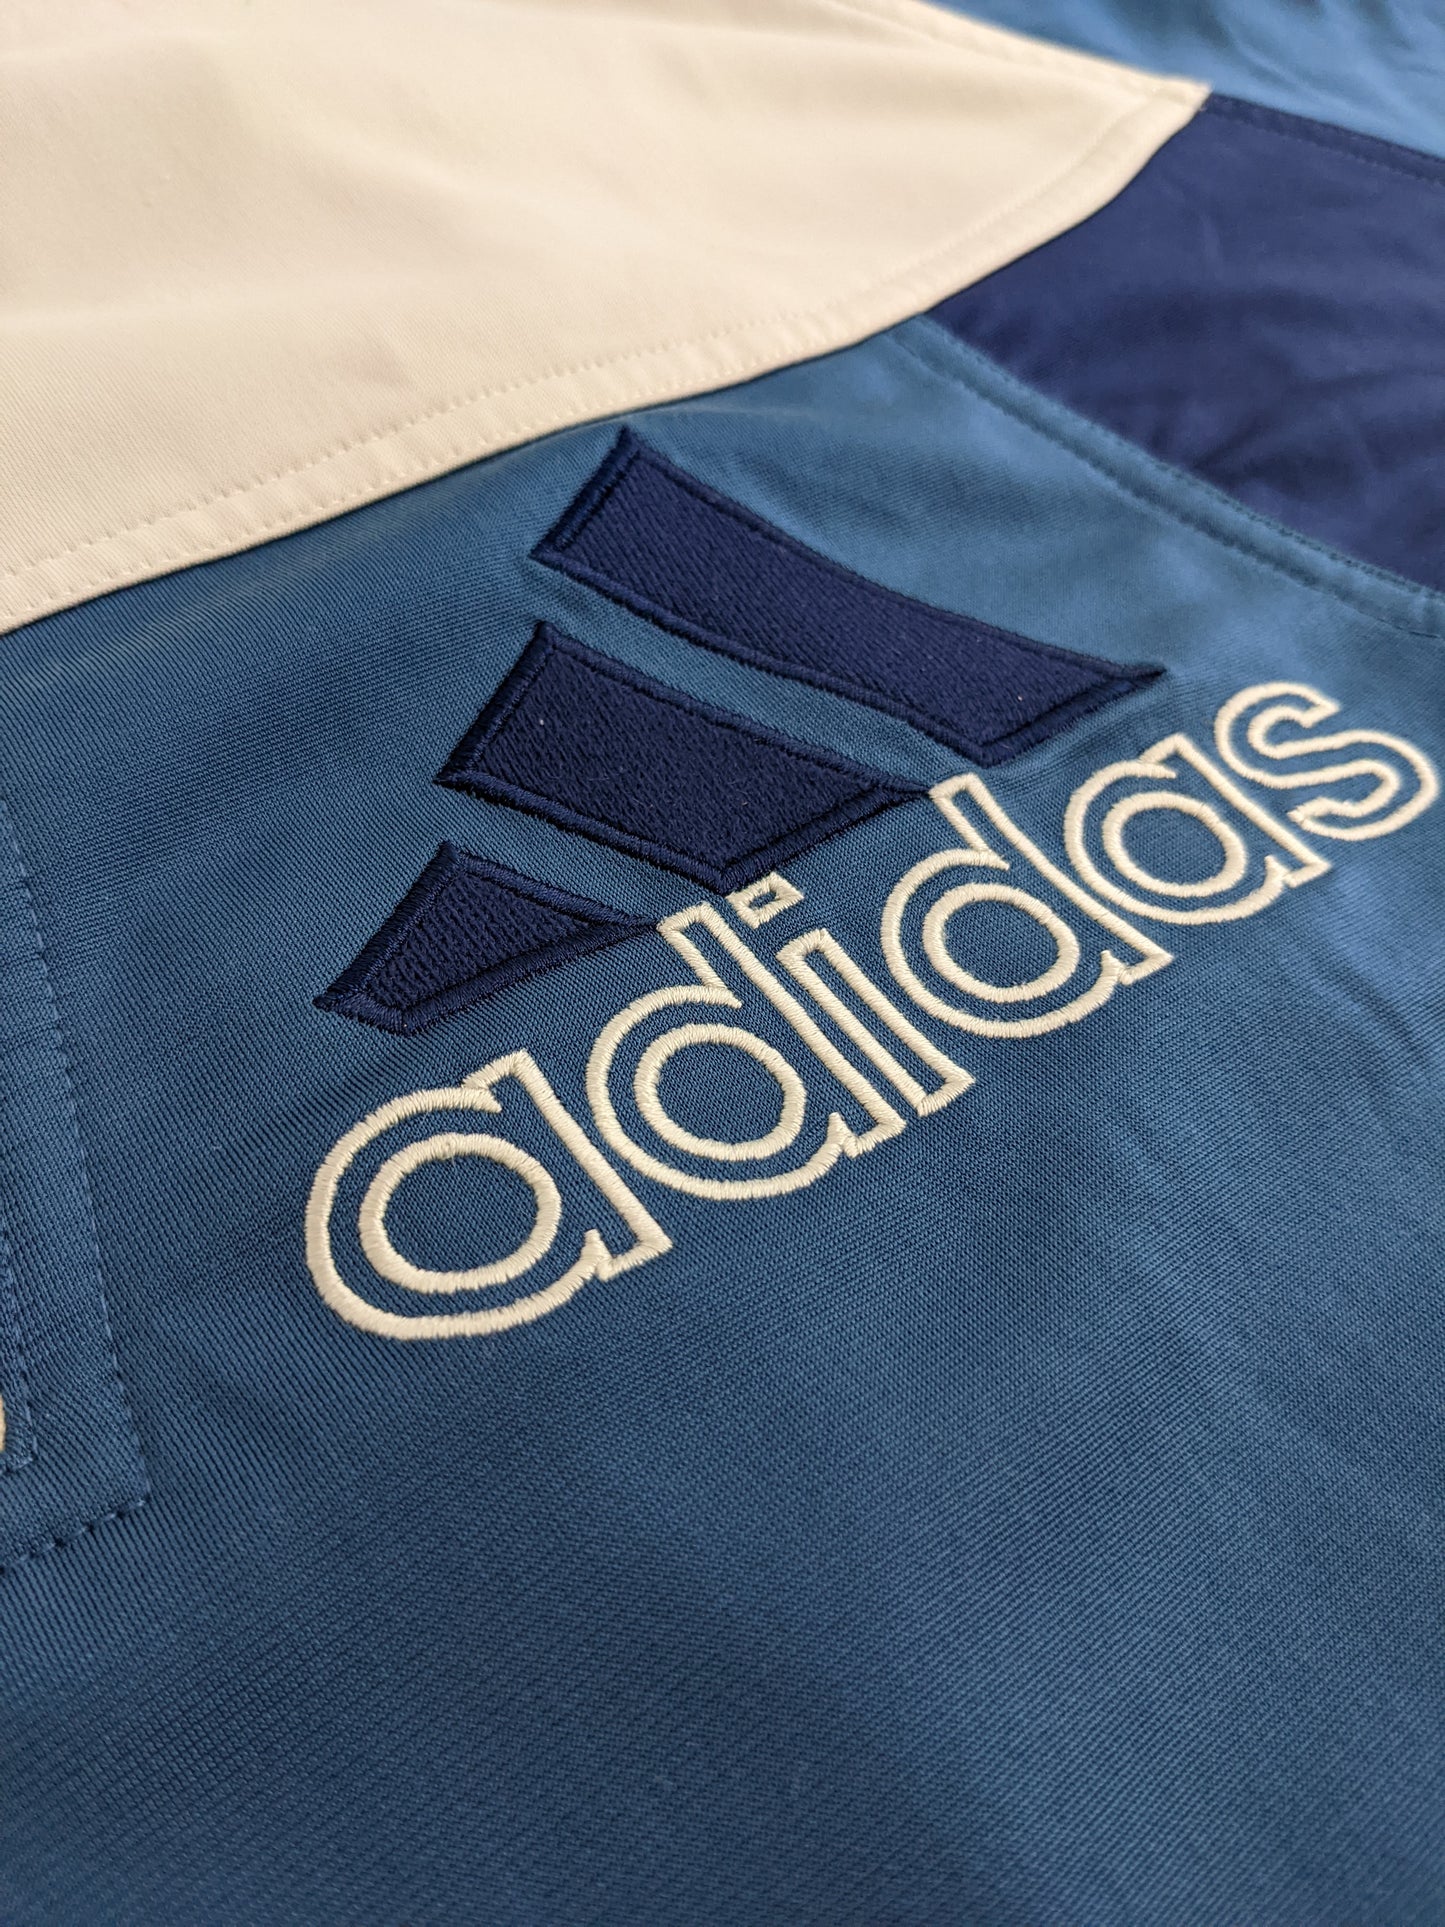 90s Adidas Trackjacket Blue  M